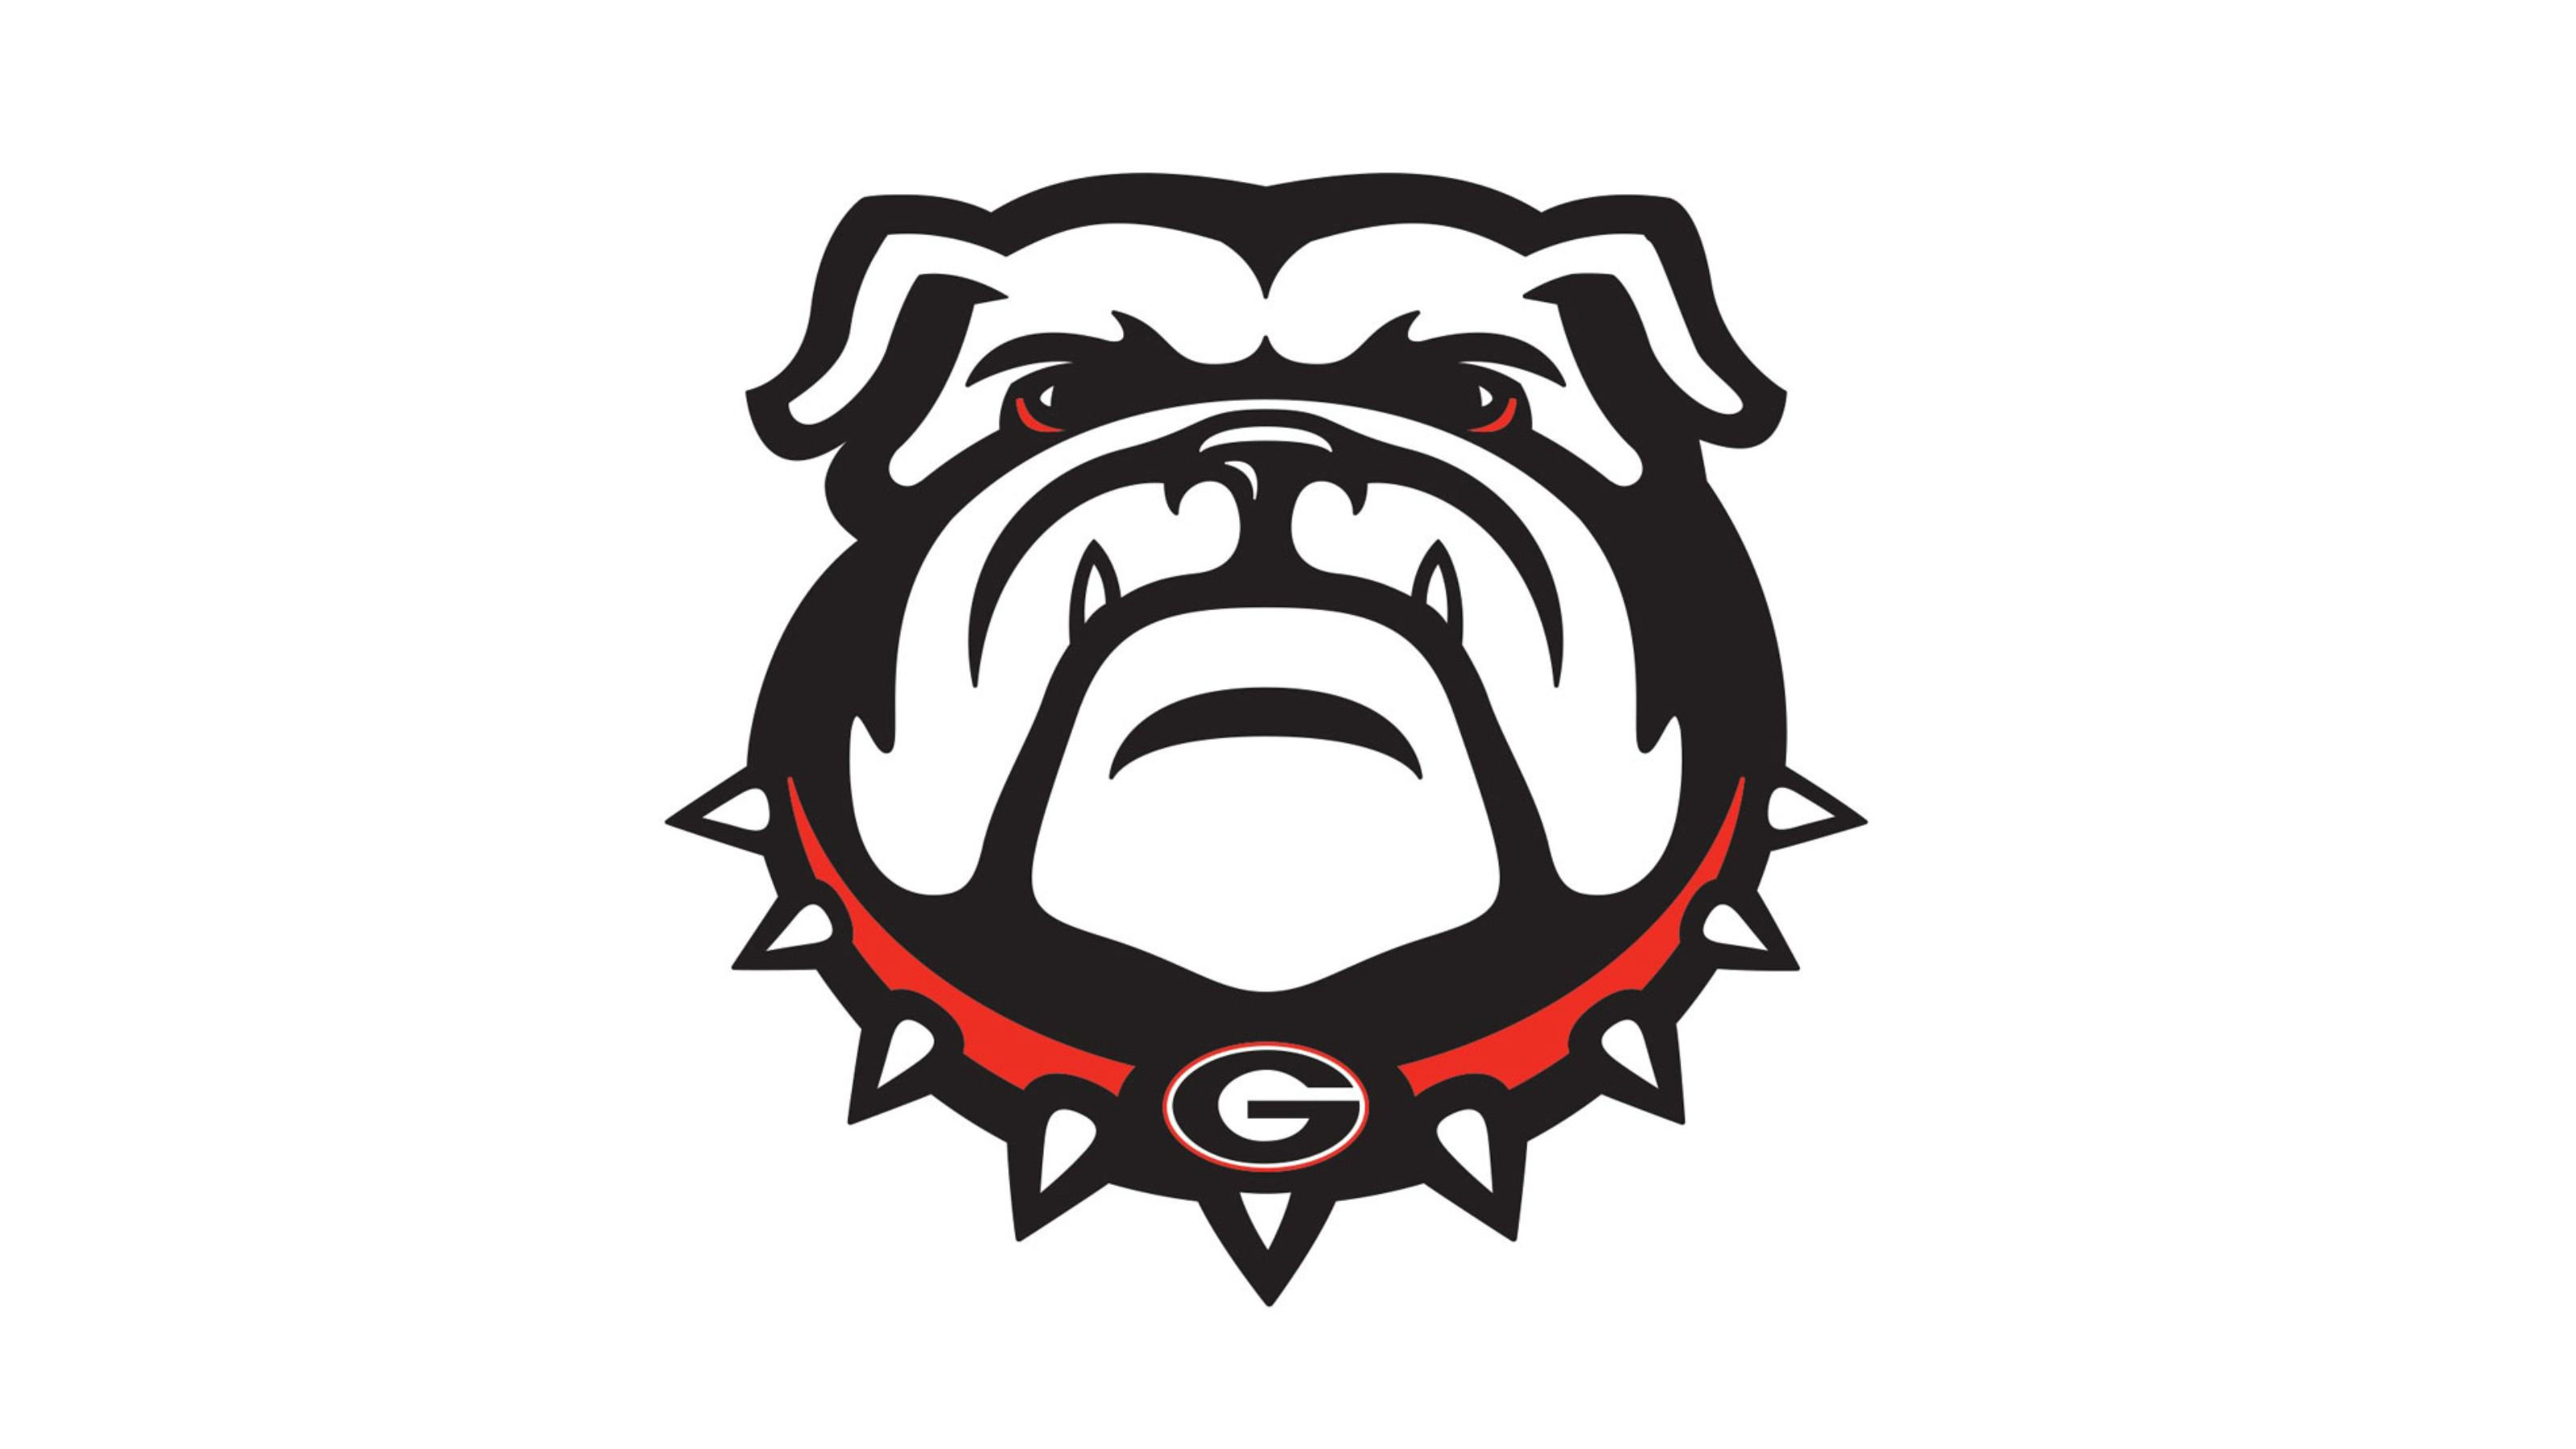 Georgia Bulldogs Backgrounds, Compatible - PC, Mobile, Gadgets| 3200x1800 px